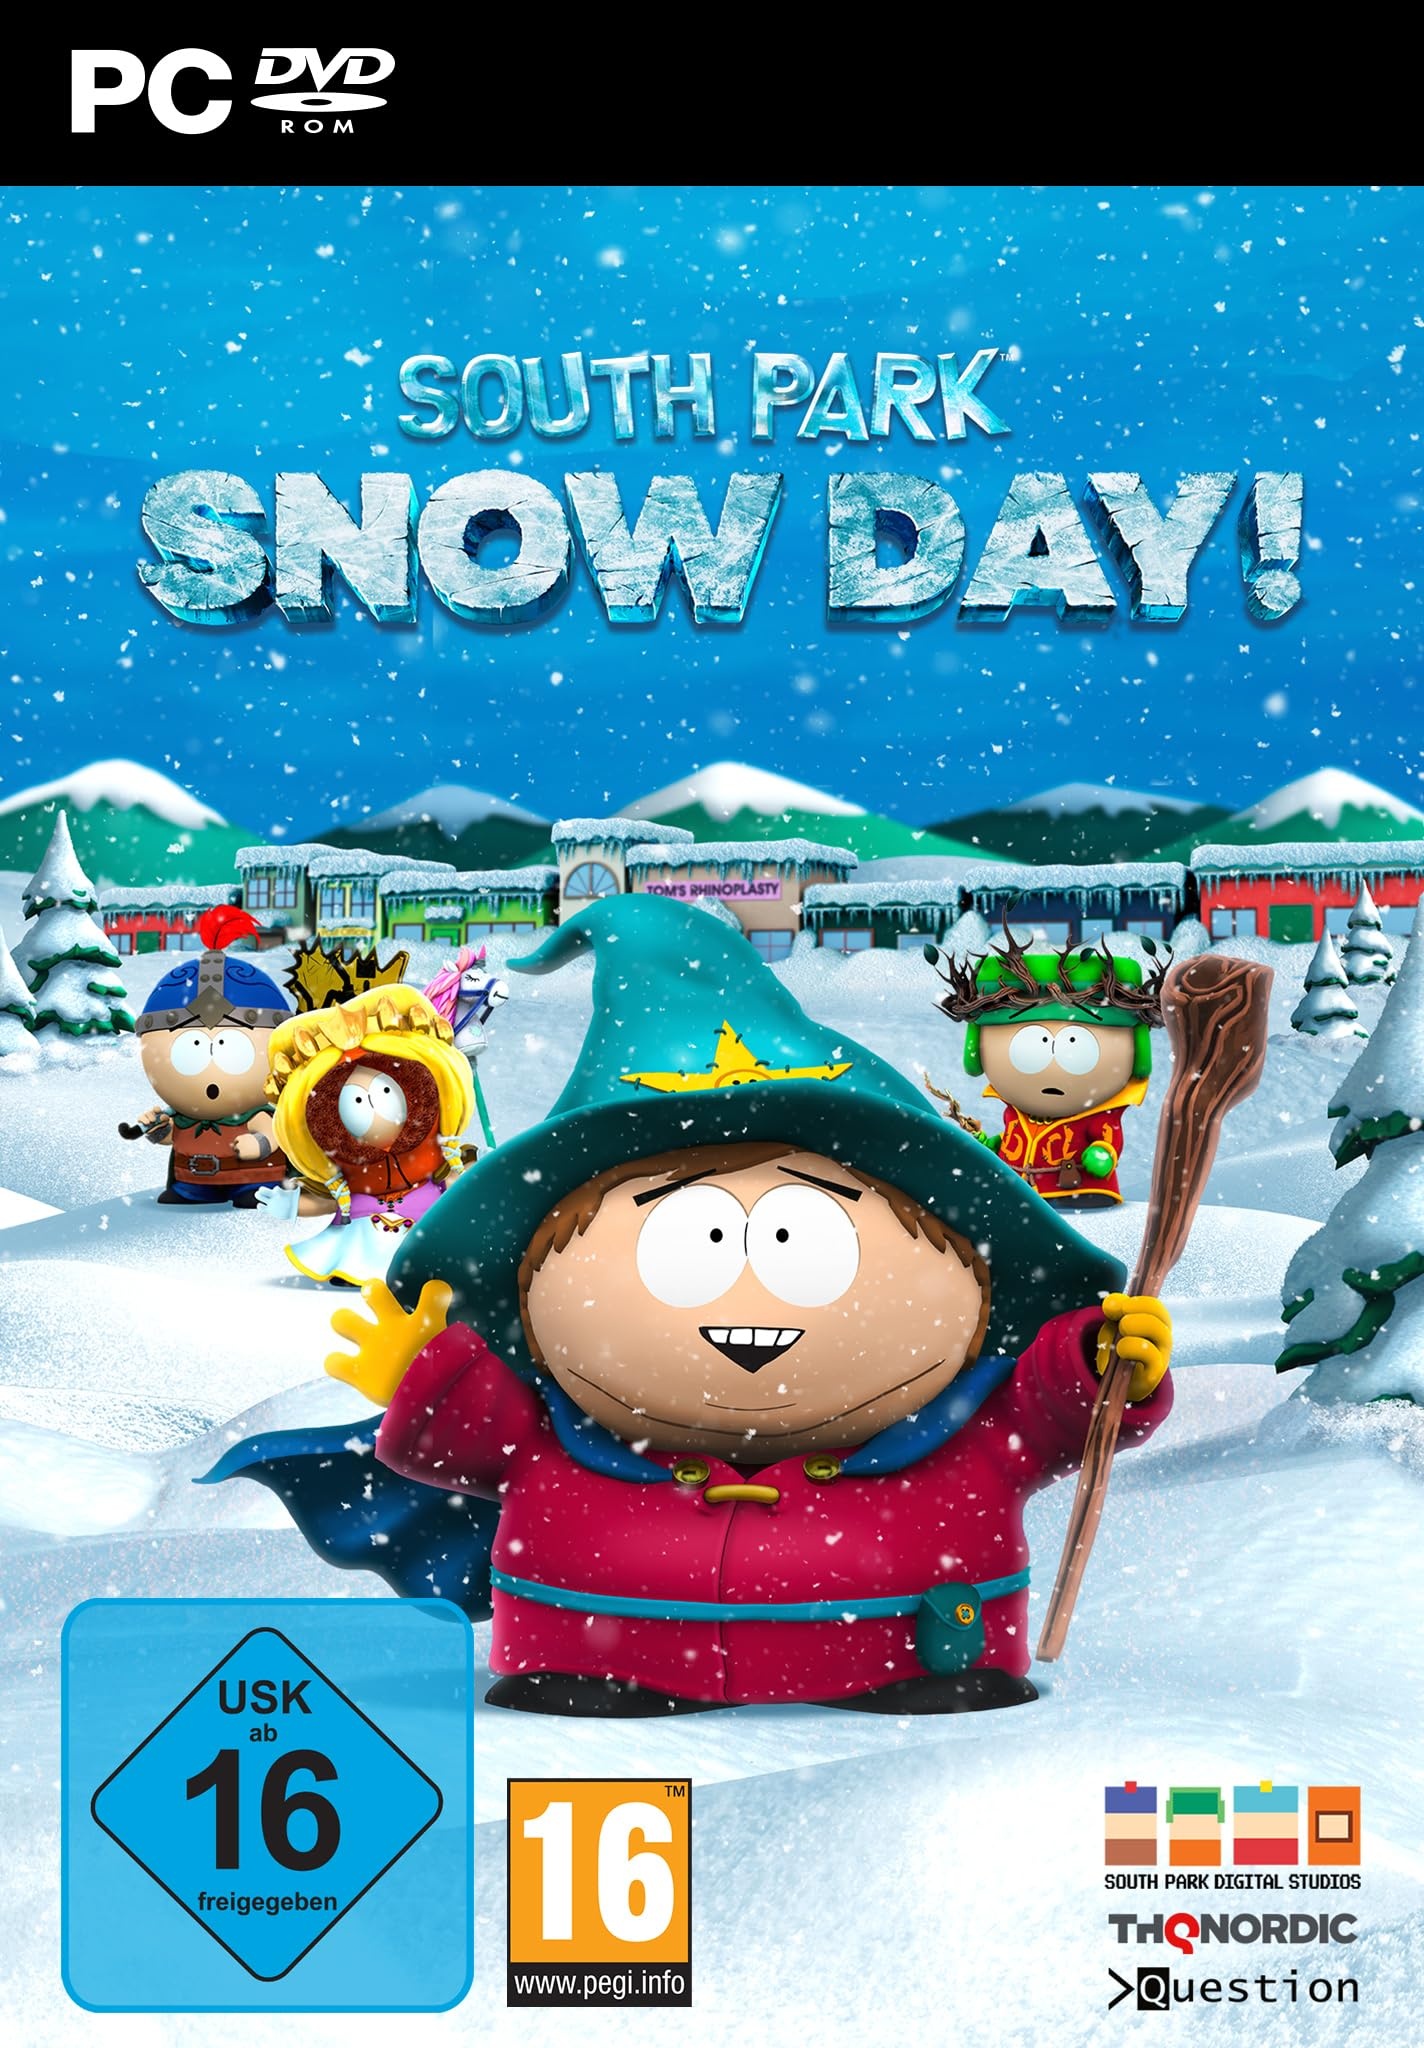 SOUTH PARK: SNOW DAY! - PC